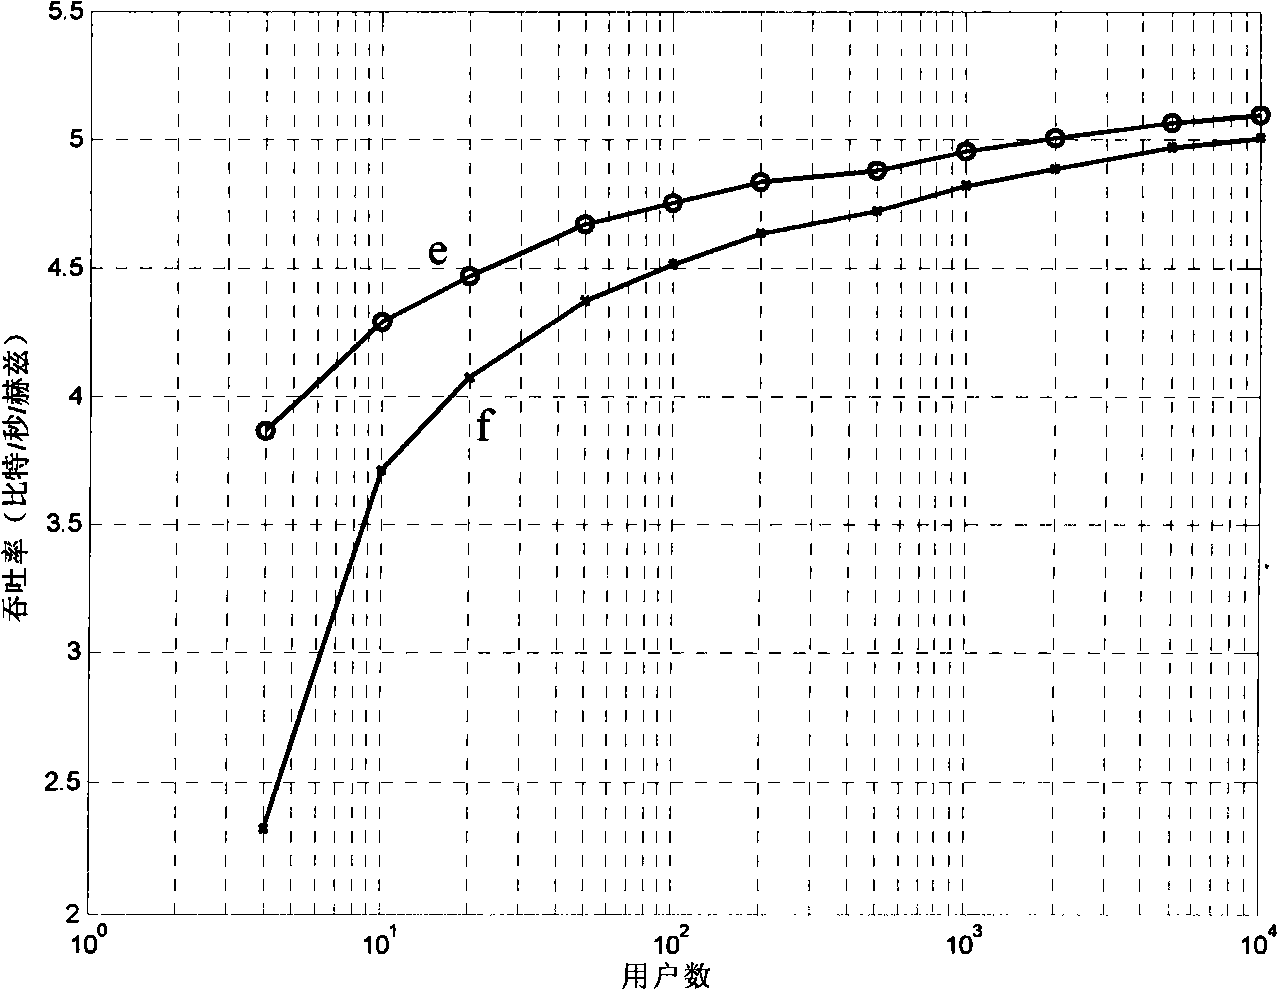 Multi-antenna relay transmission method based on singular value decomposition close-to zero beam forming